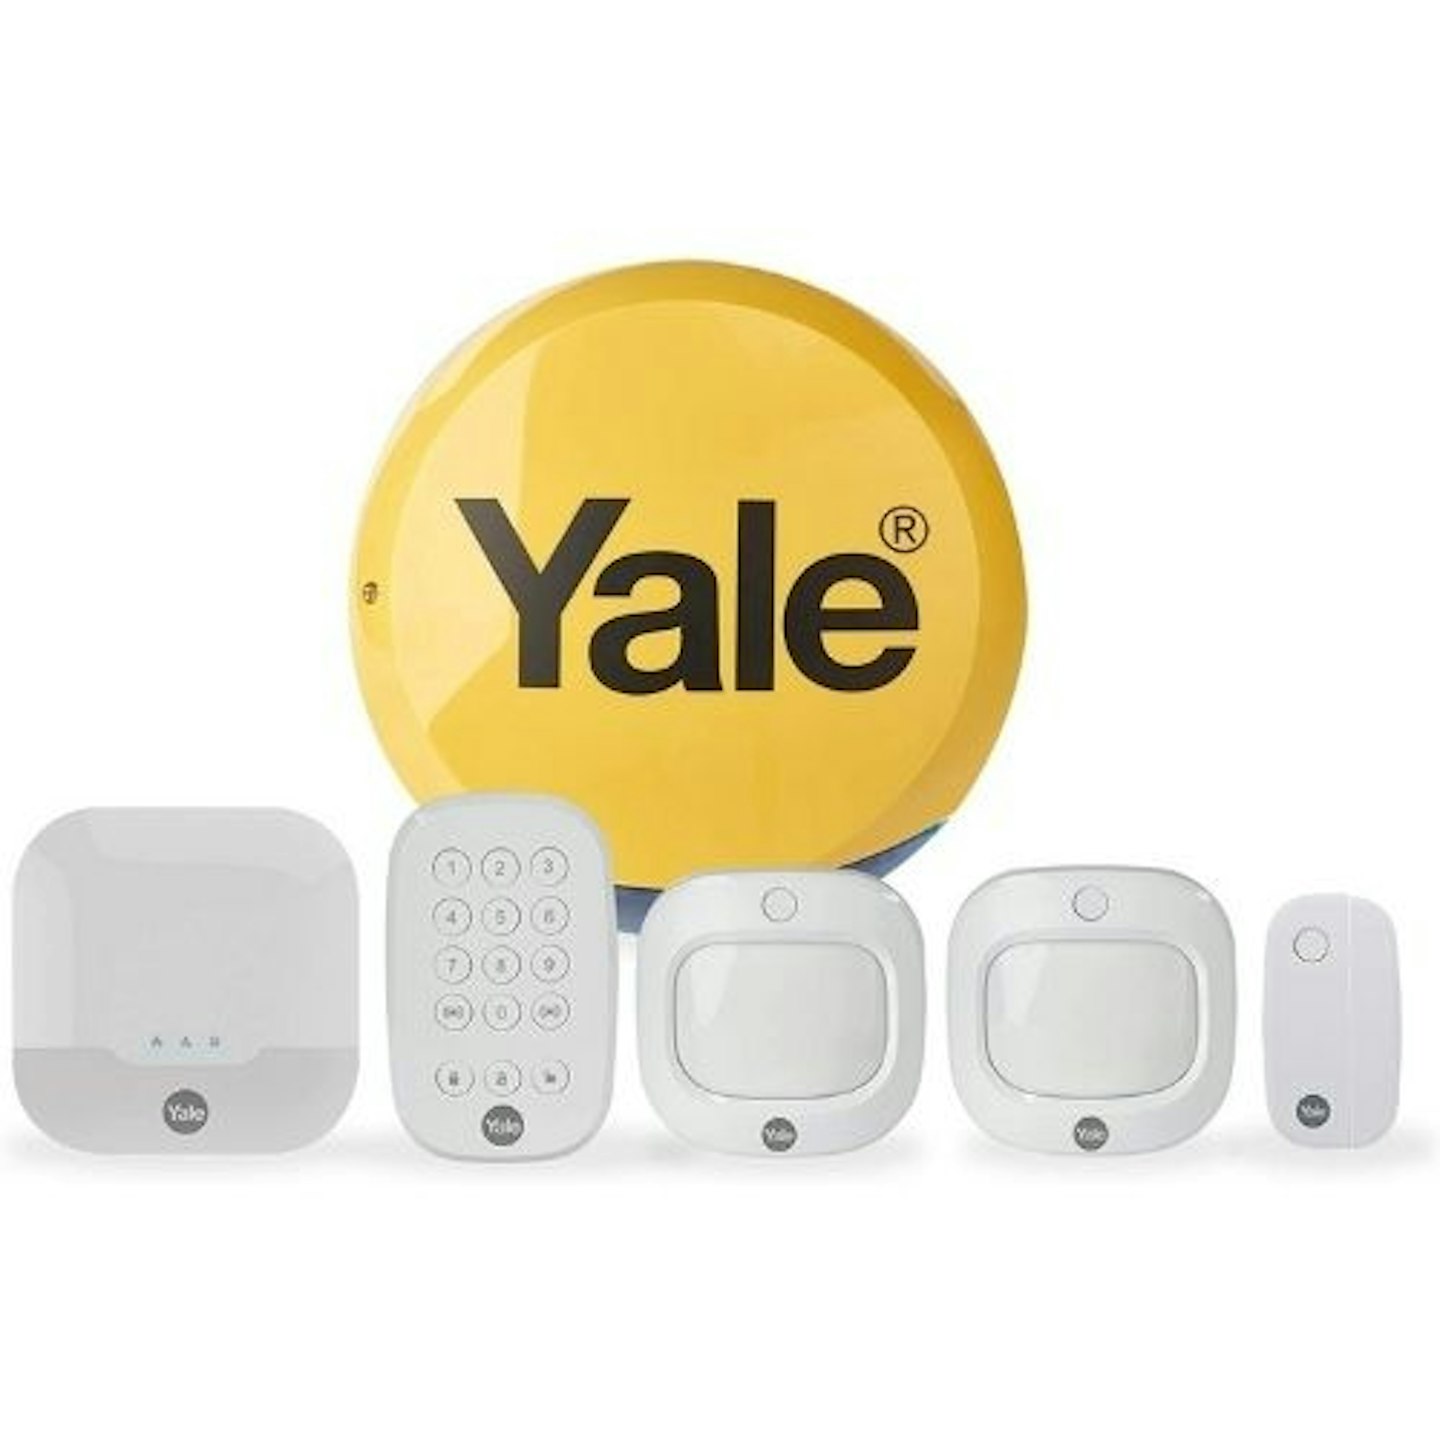 Yale Sync IA-320 Sync Smart Home Security Alarm System